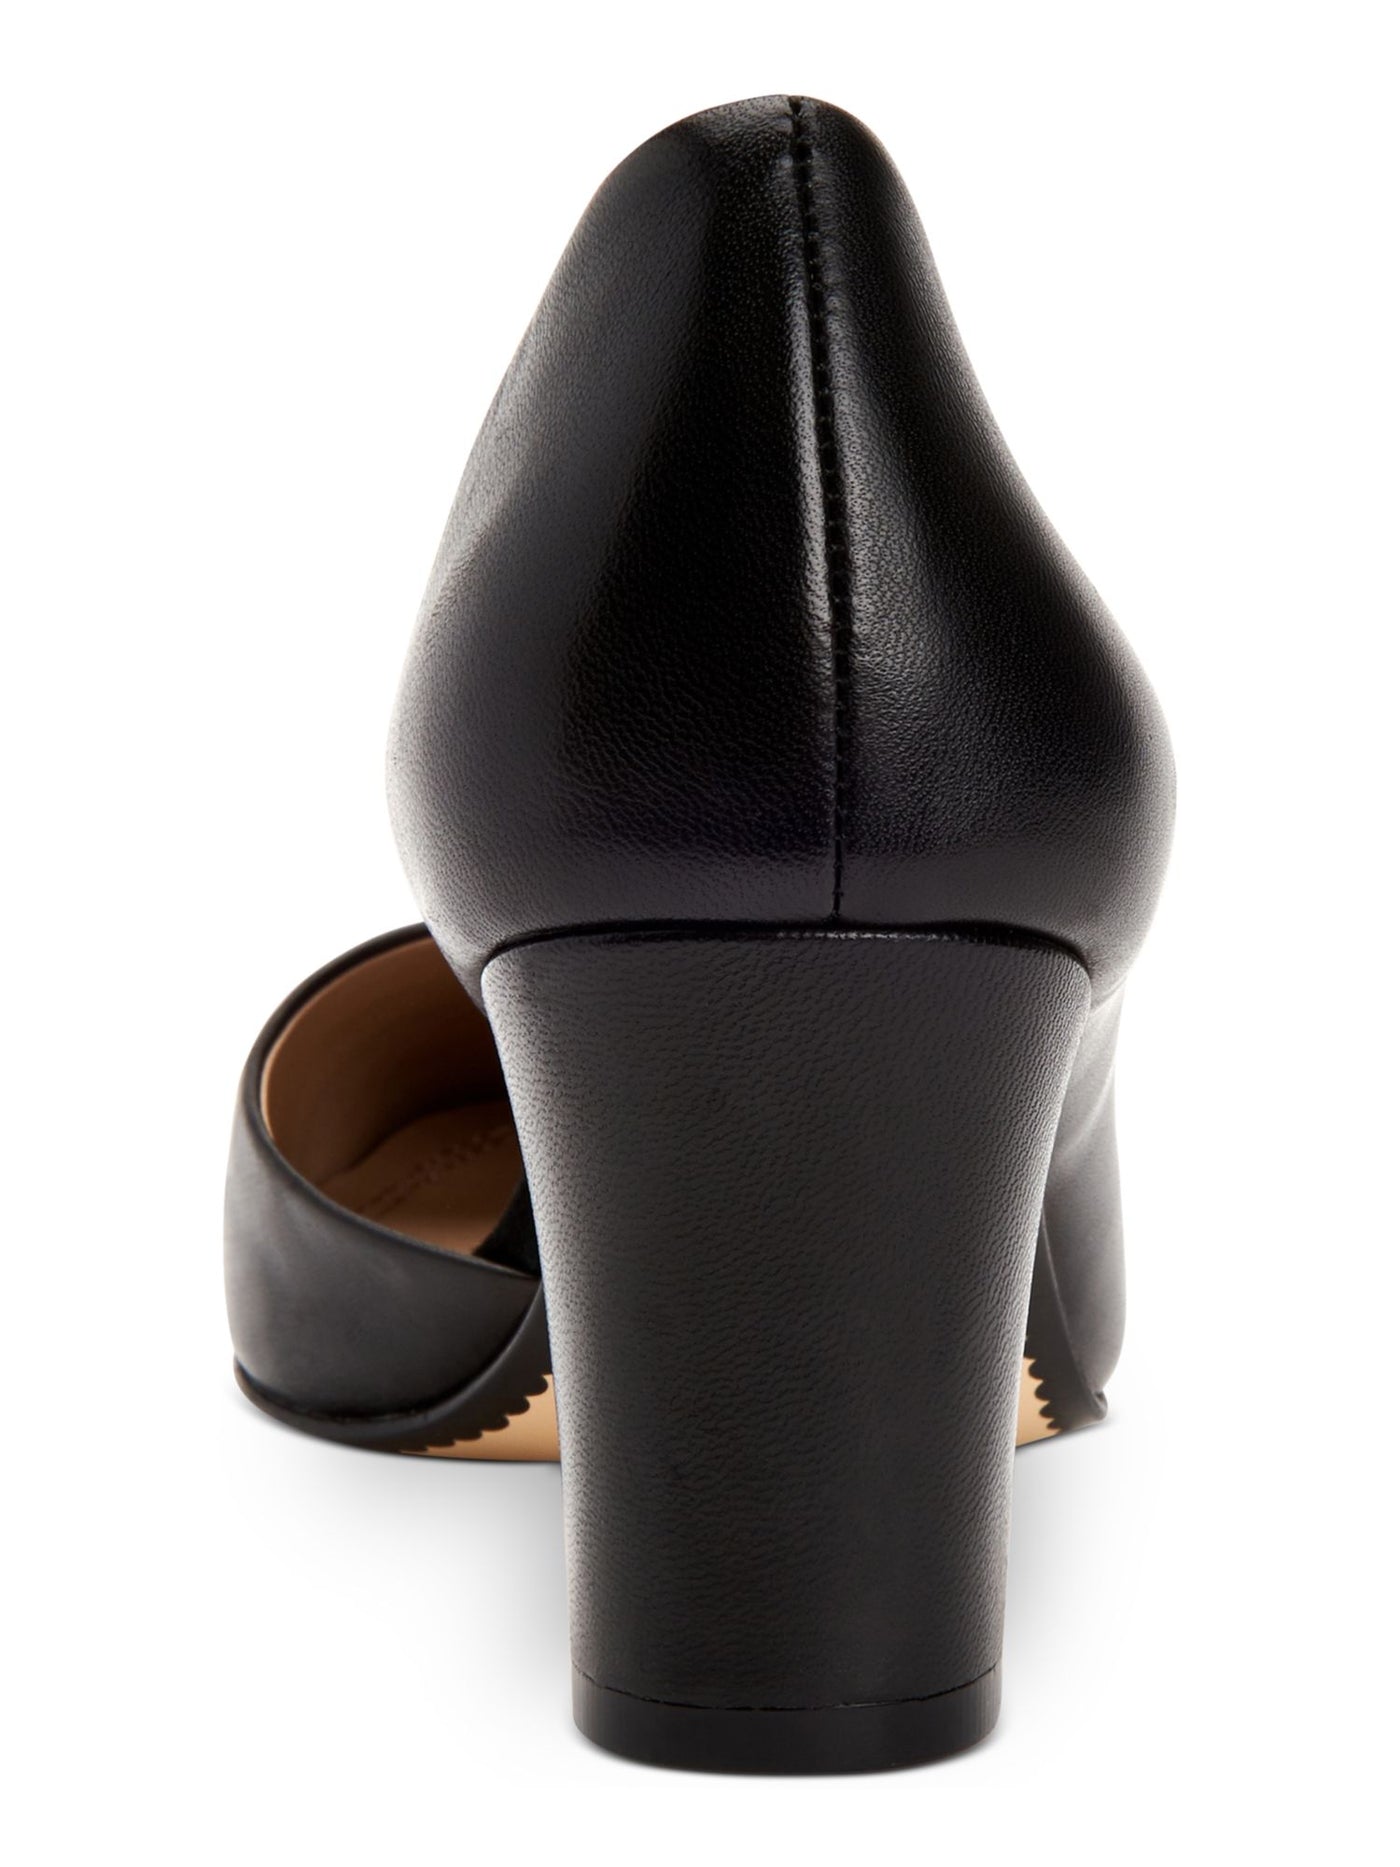 CHARTER CLUB Womens Black Cap Toe D'orsay Brandiee Almond Toe Block Heel Slip On Leather Dress Pumps Shoes 10 M